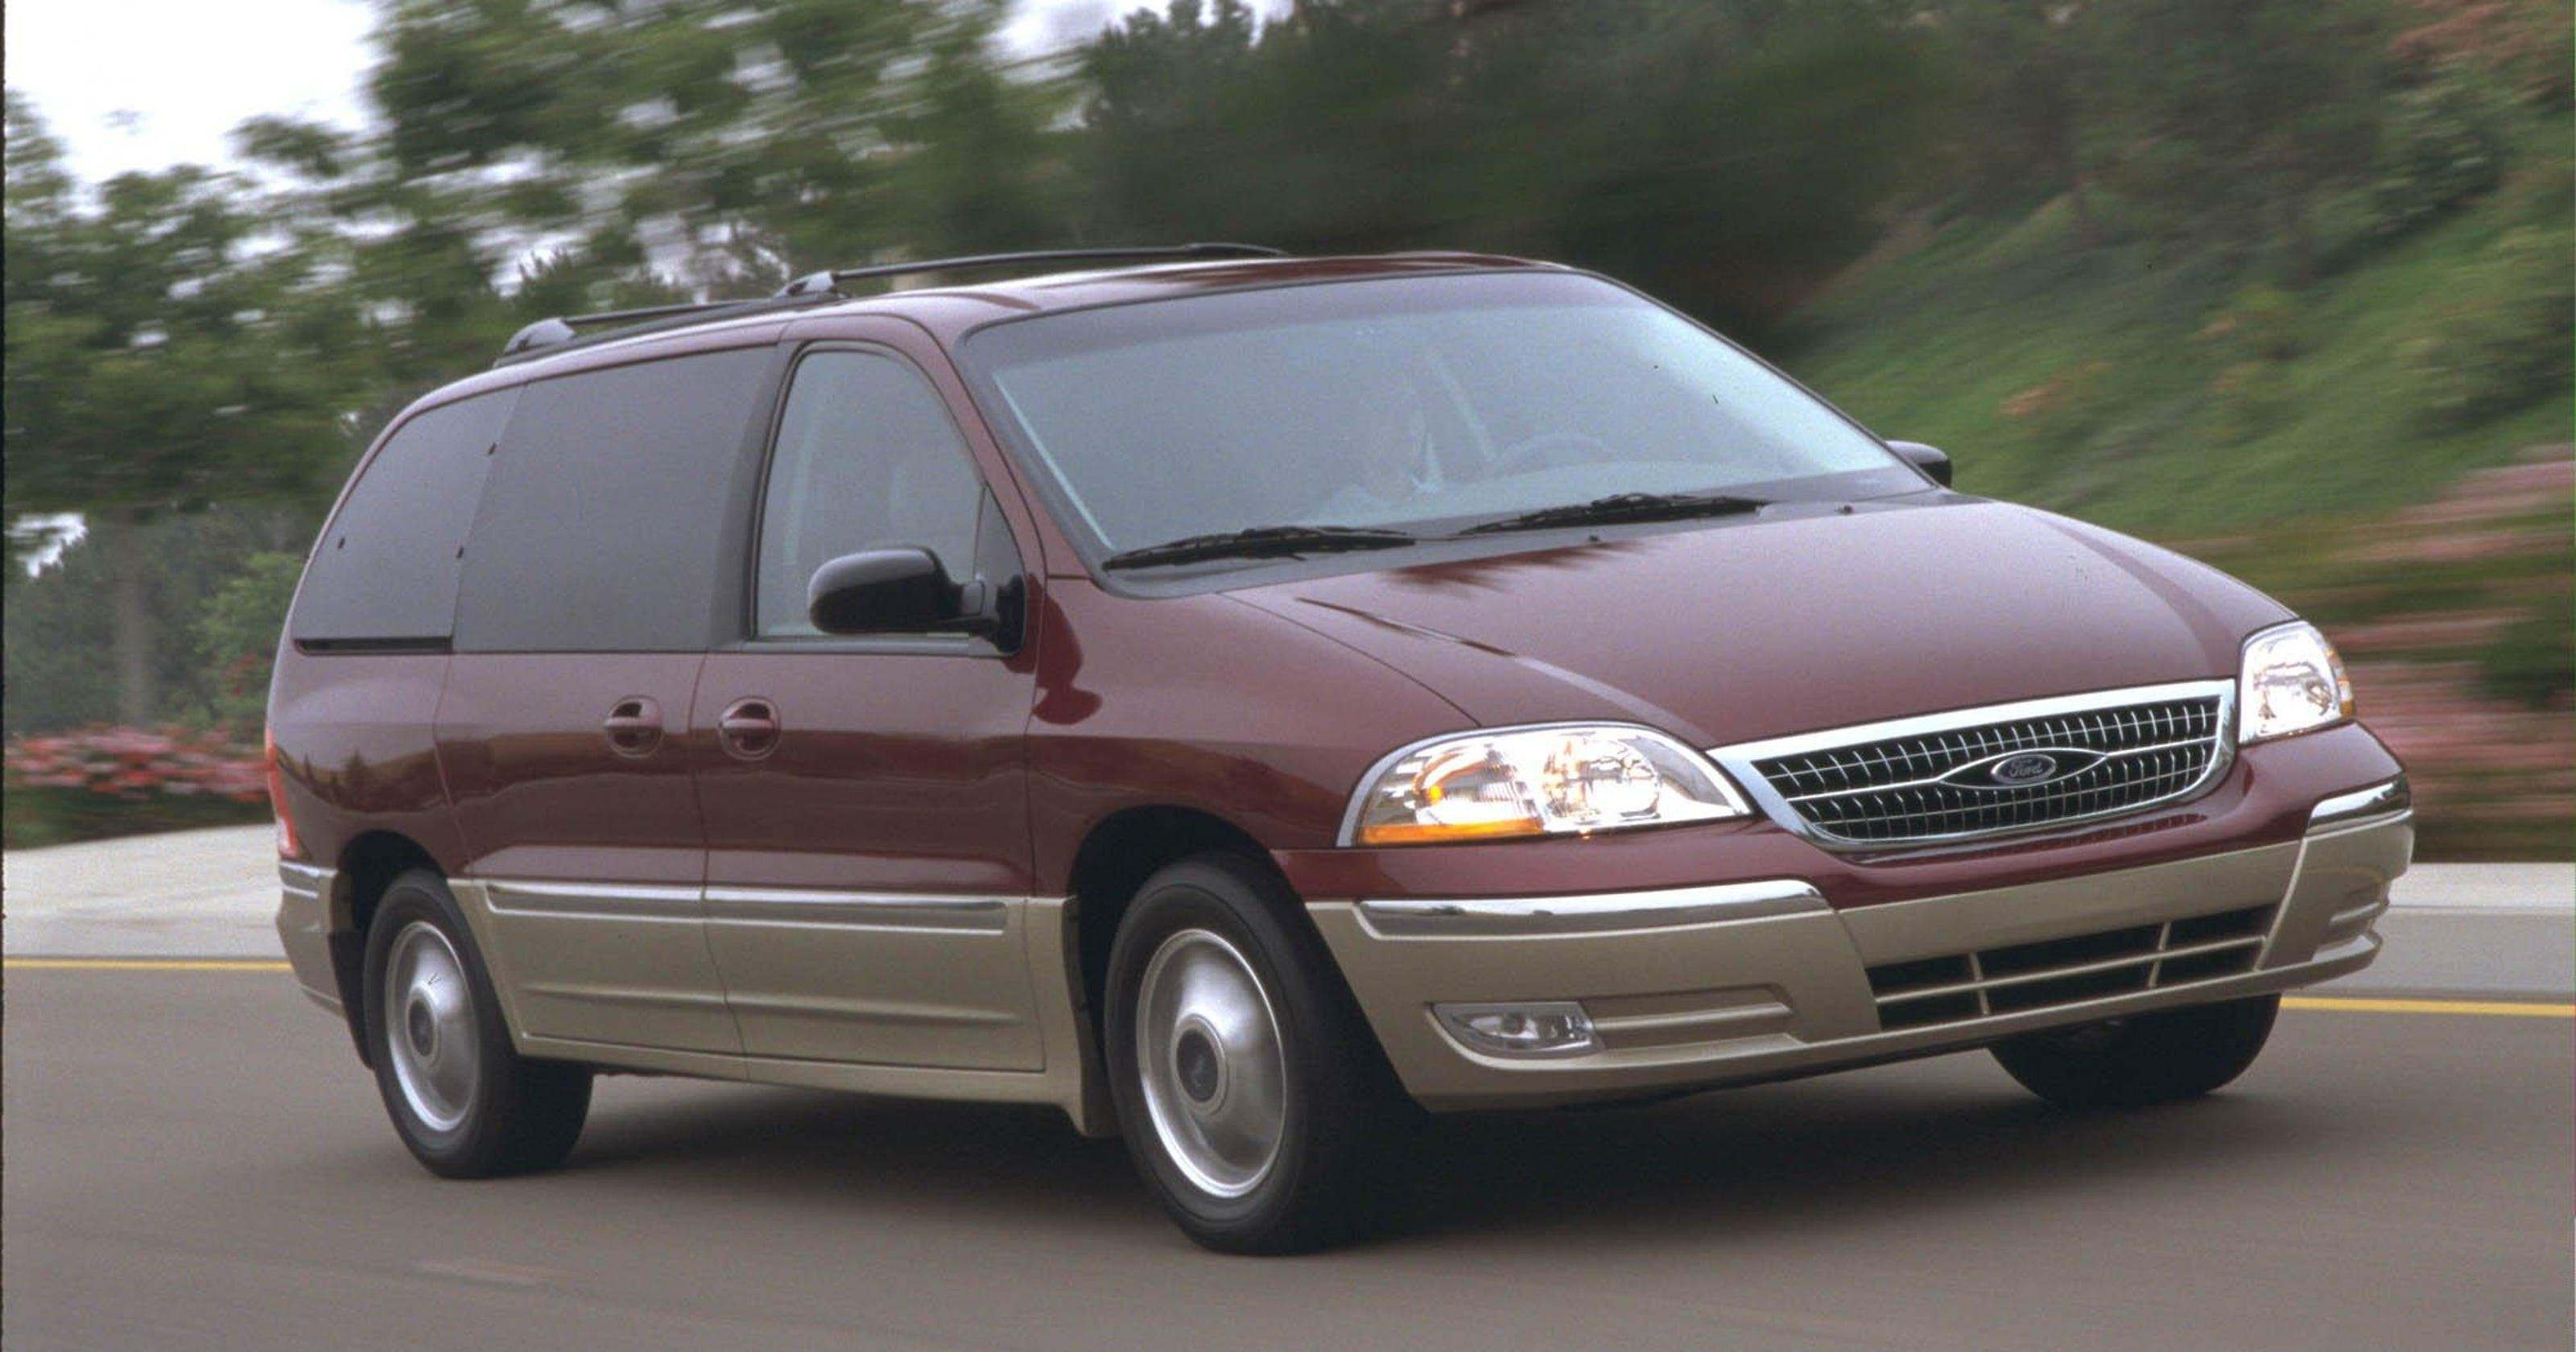 Ford recalls 342,000 Windstar minivans for axle problem